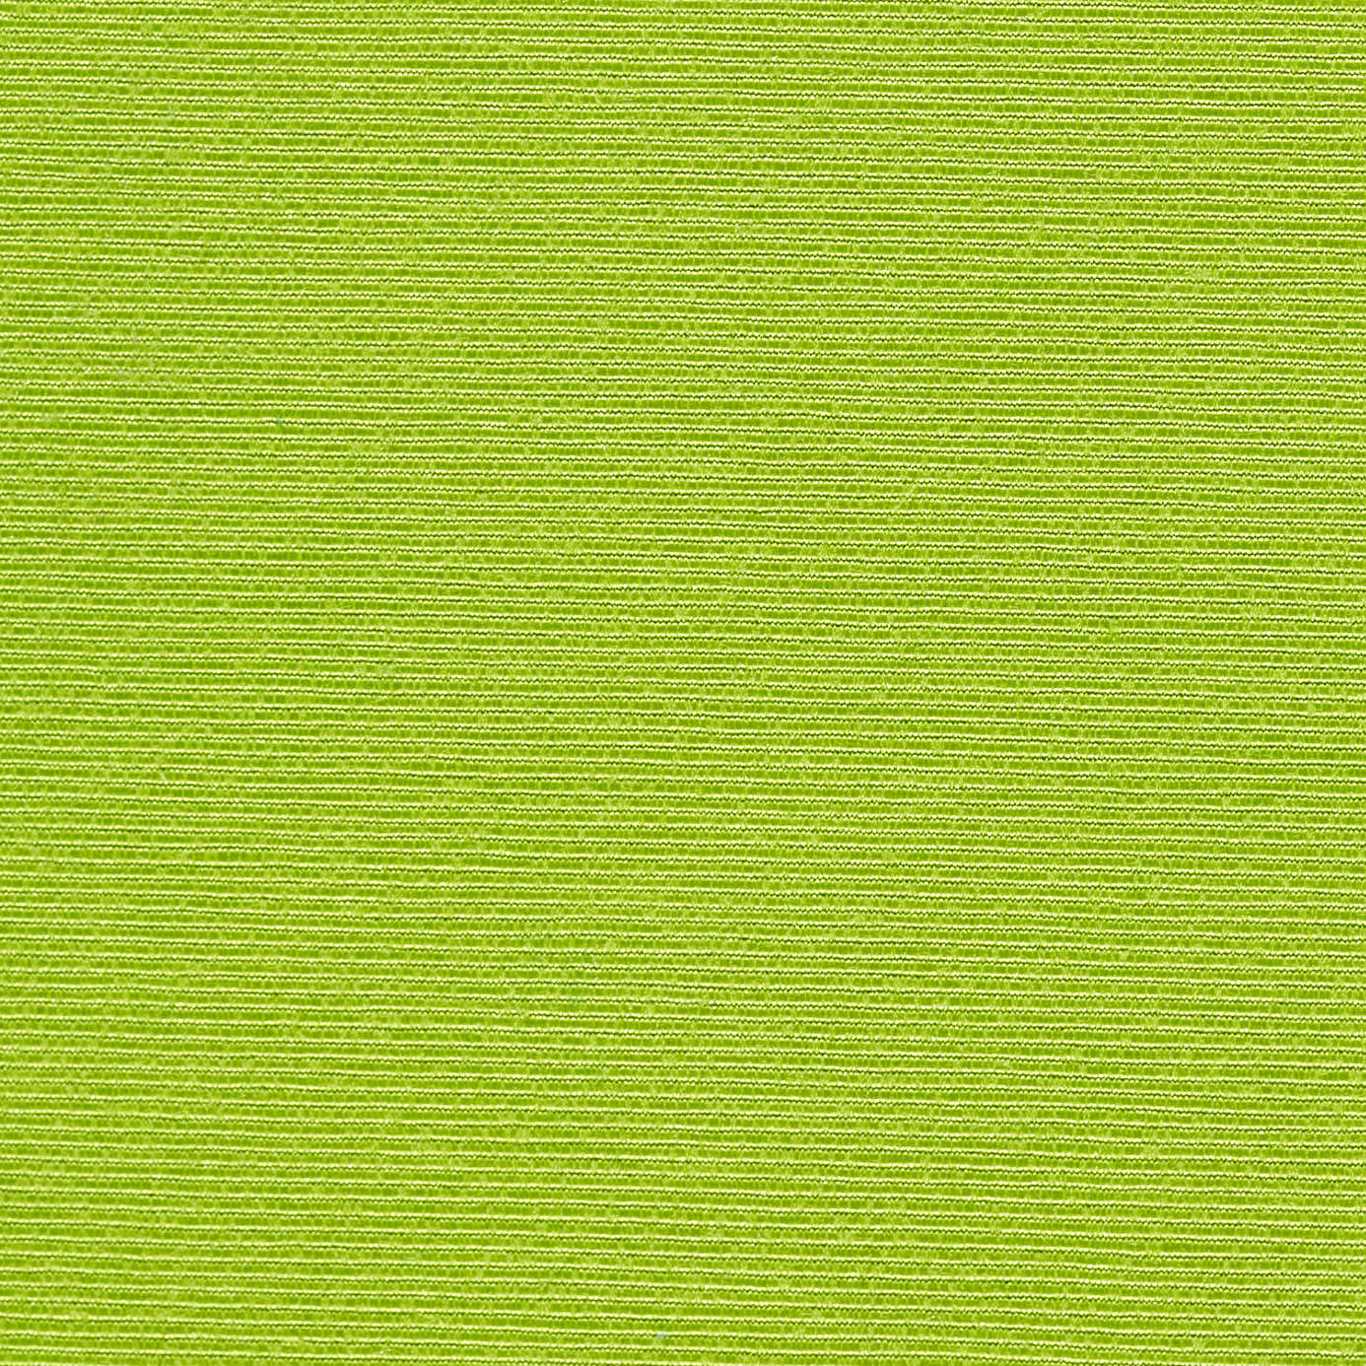 Optix Zing Green Fabric by HAR